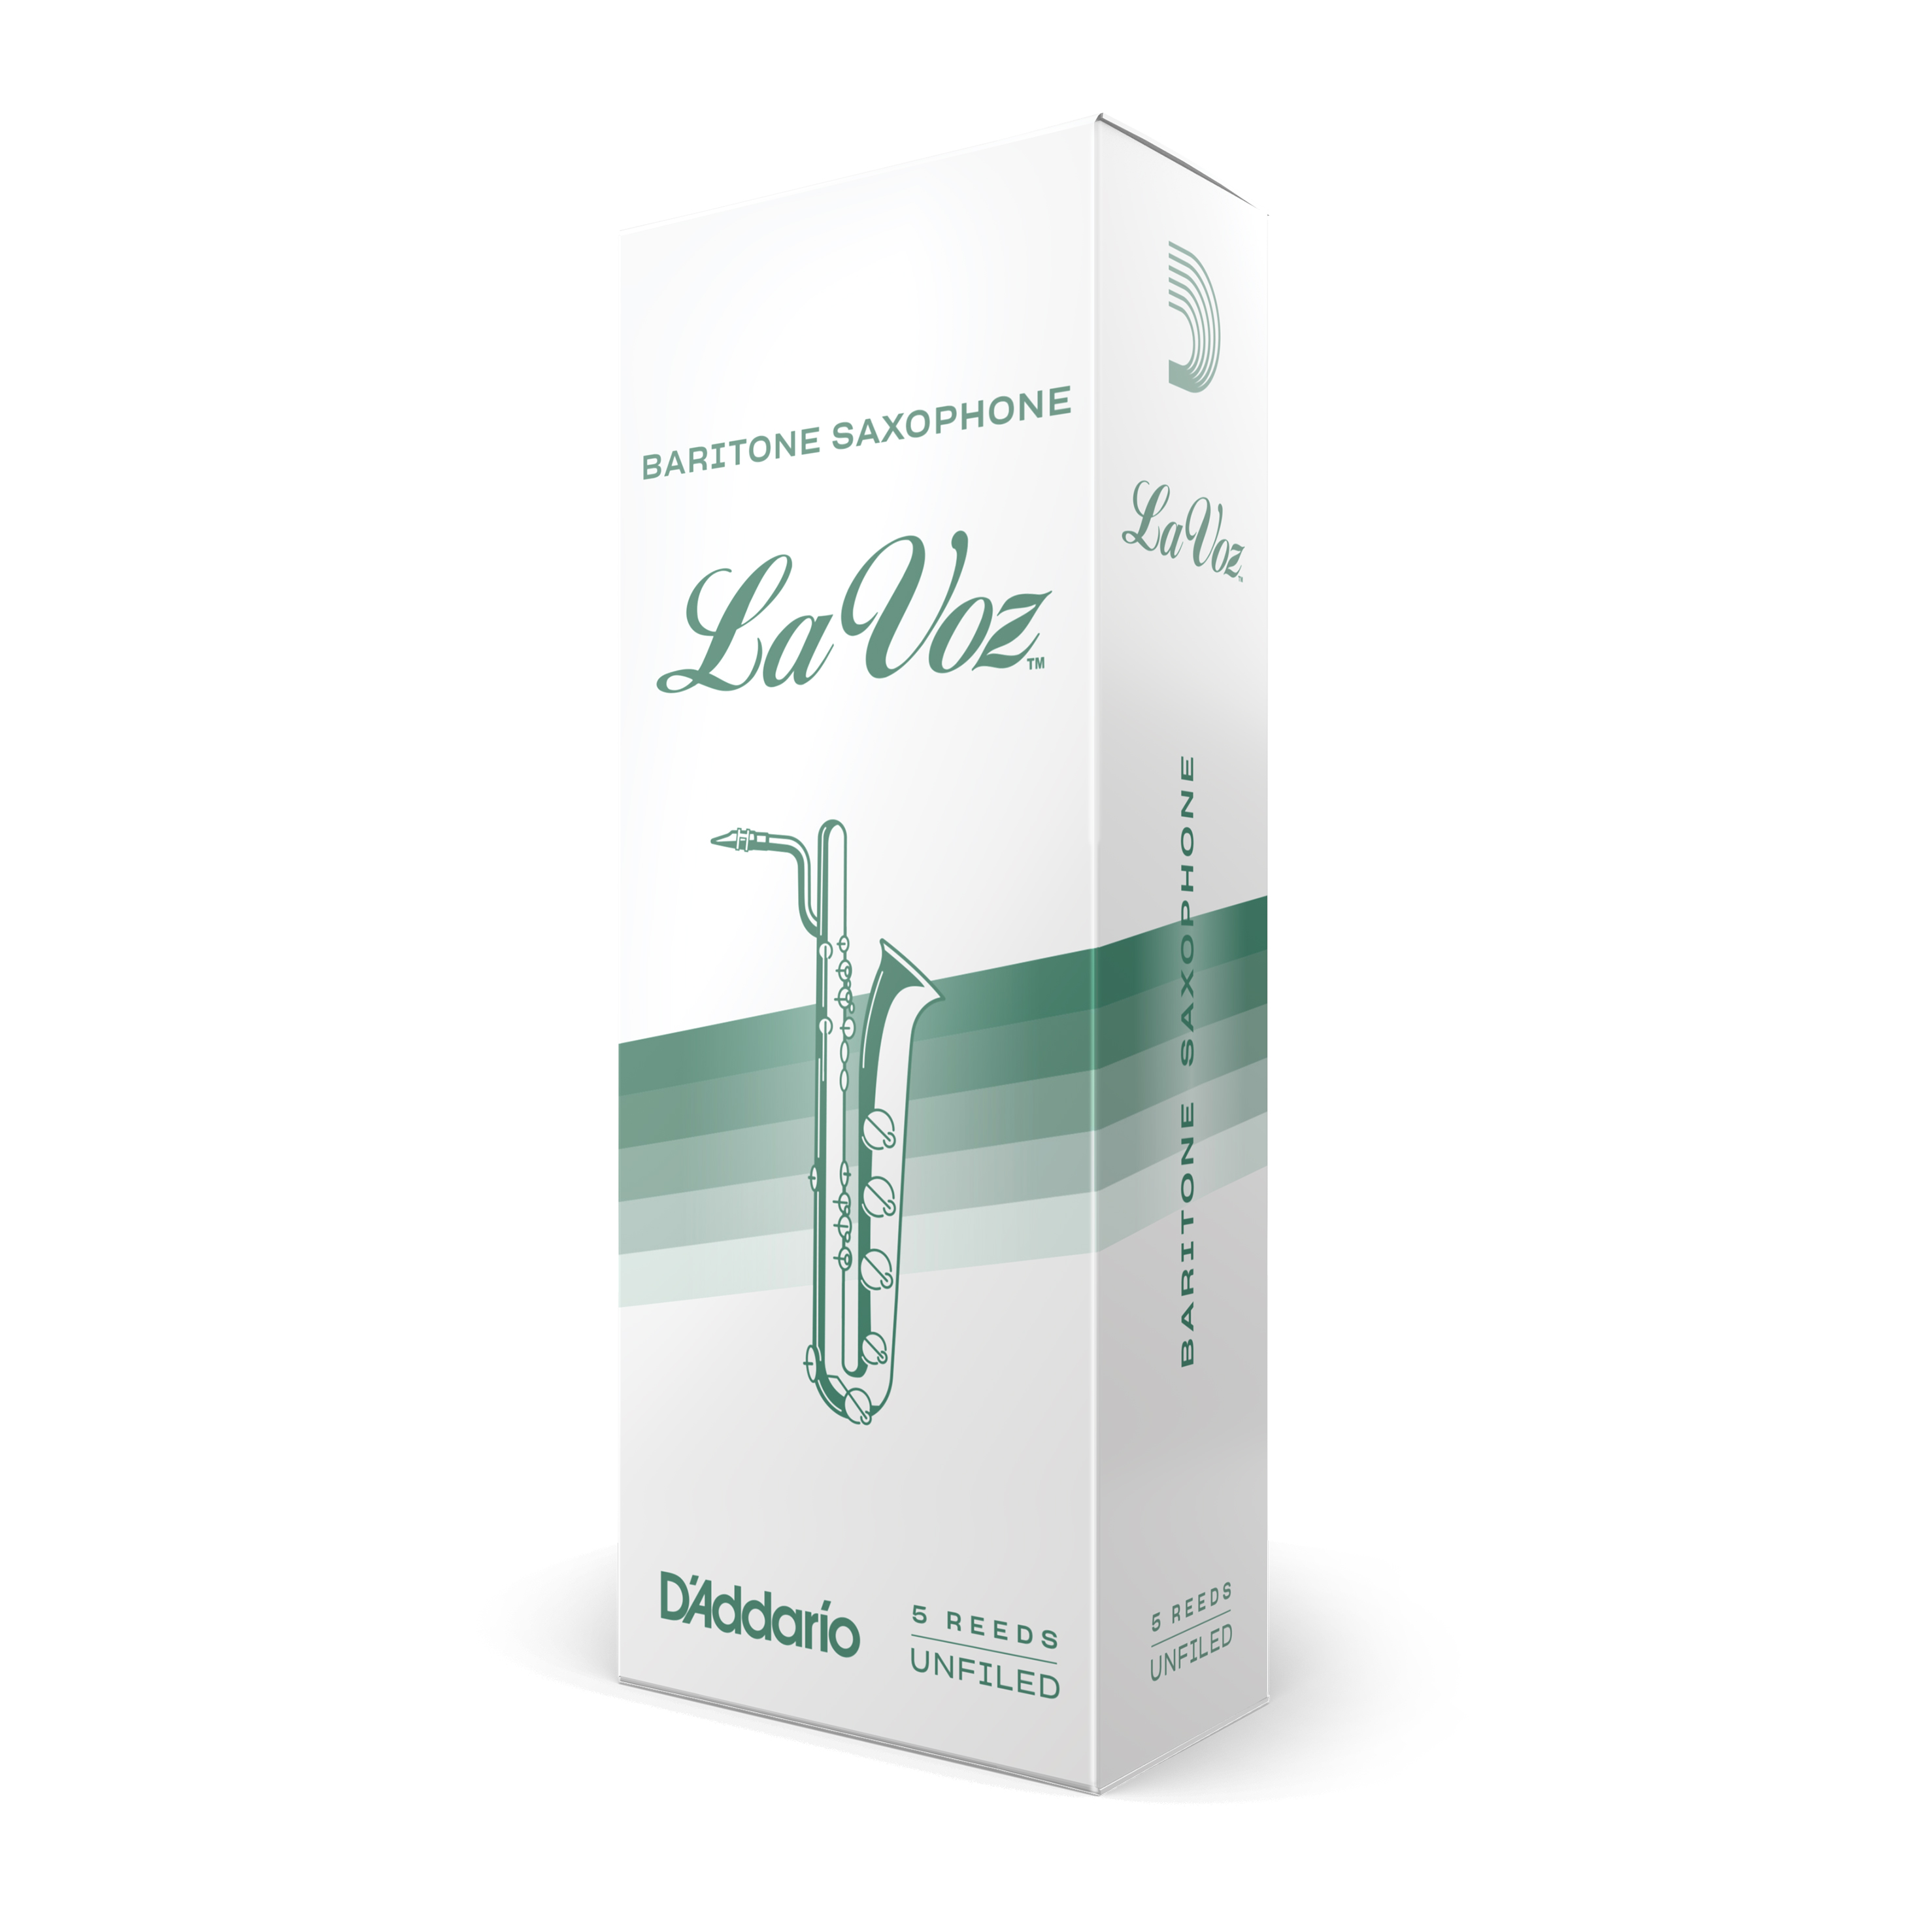 box of five LaVoz Baritone Saxophone Reeds- Strength Medium Soft